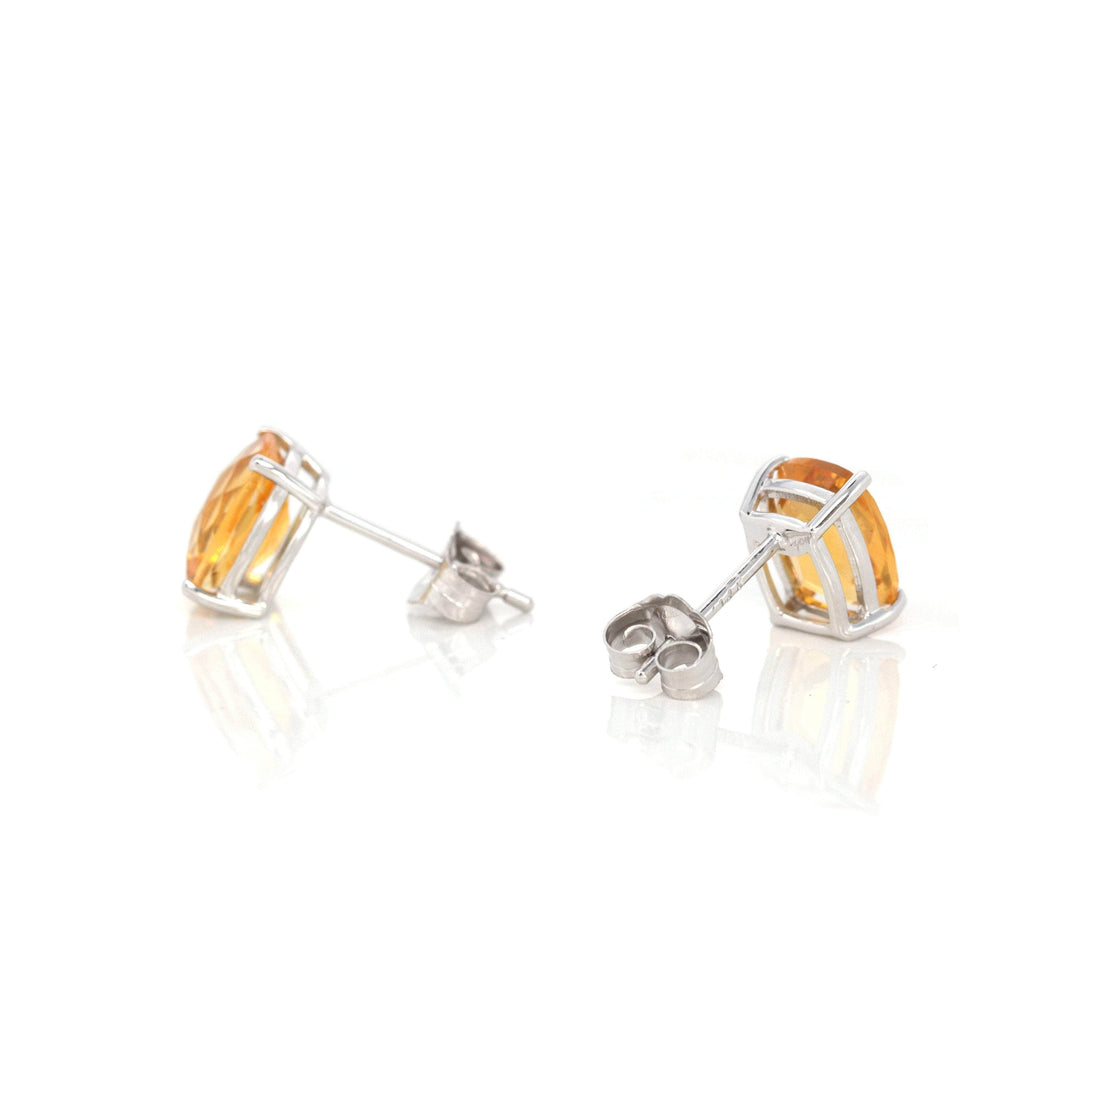 Baikalla Jewelry Gold Gemstone Earrings Baikalla 14k Classic White Gold Natural 6*8mm Emerald Cushion Cut Citrine Earrings